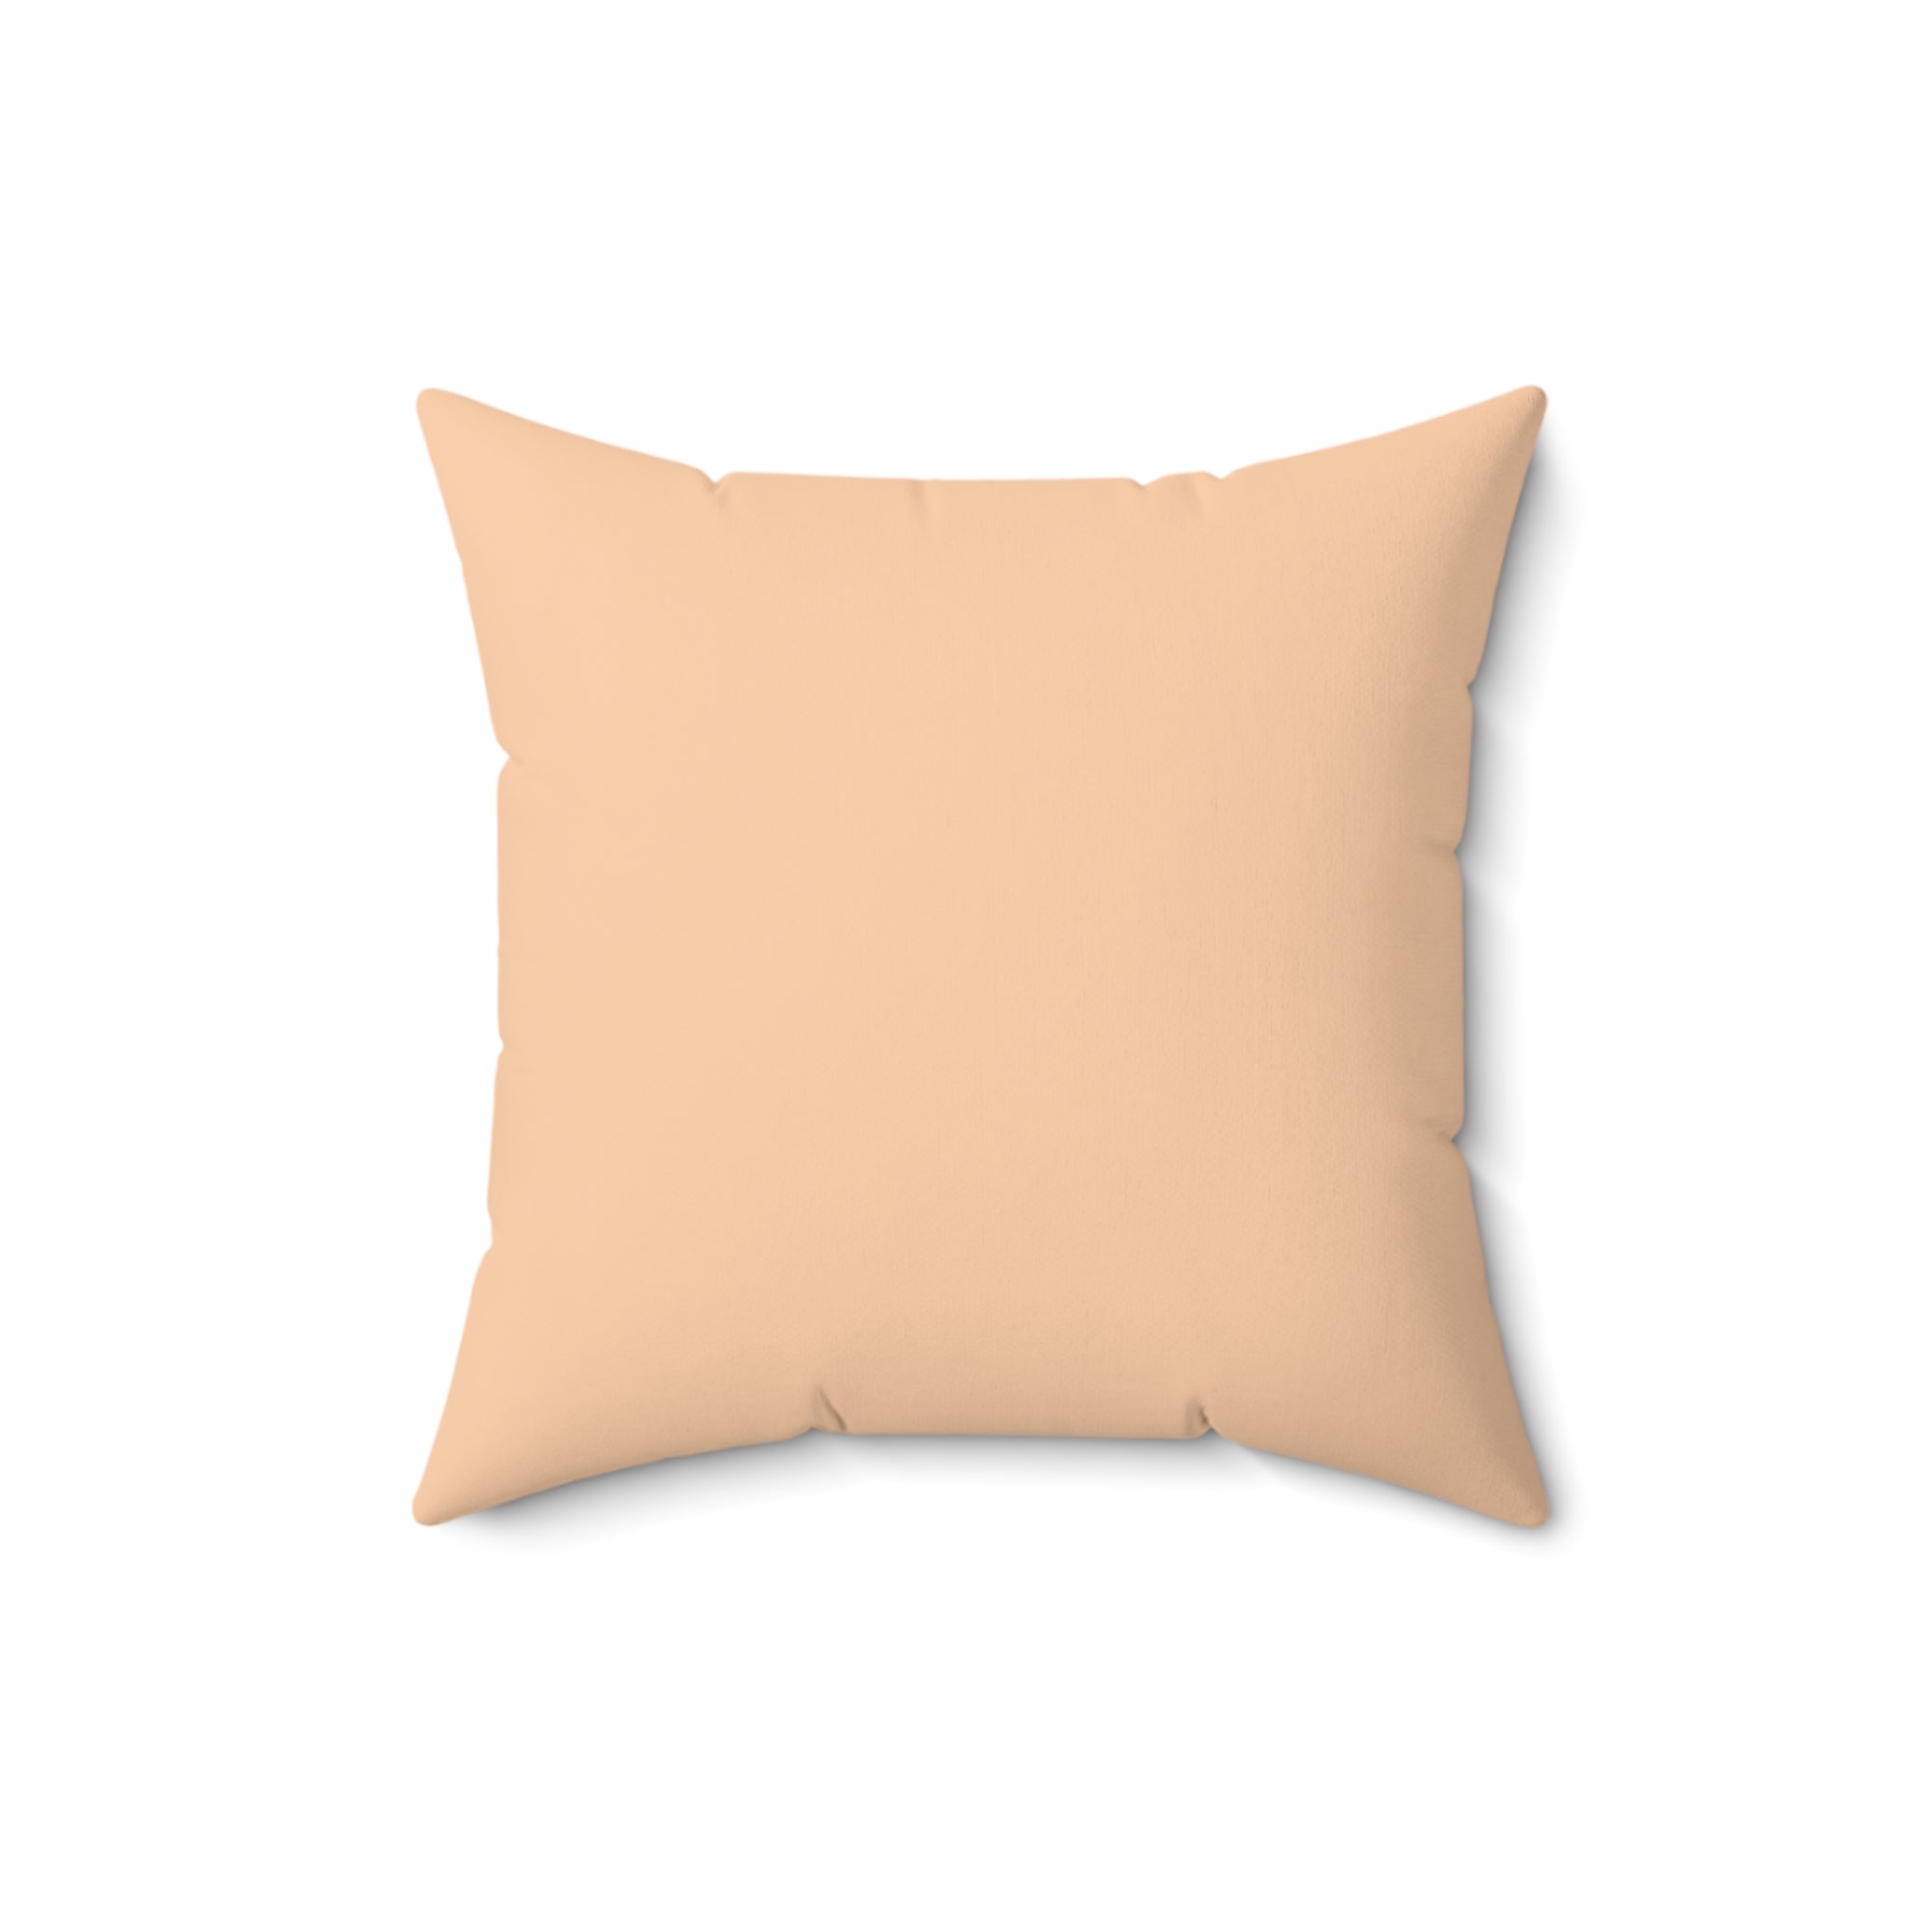 United Kingdom Decor Pillow